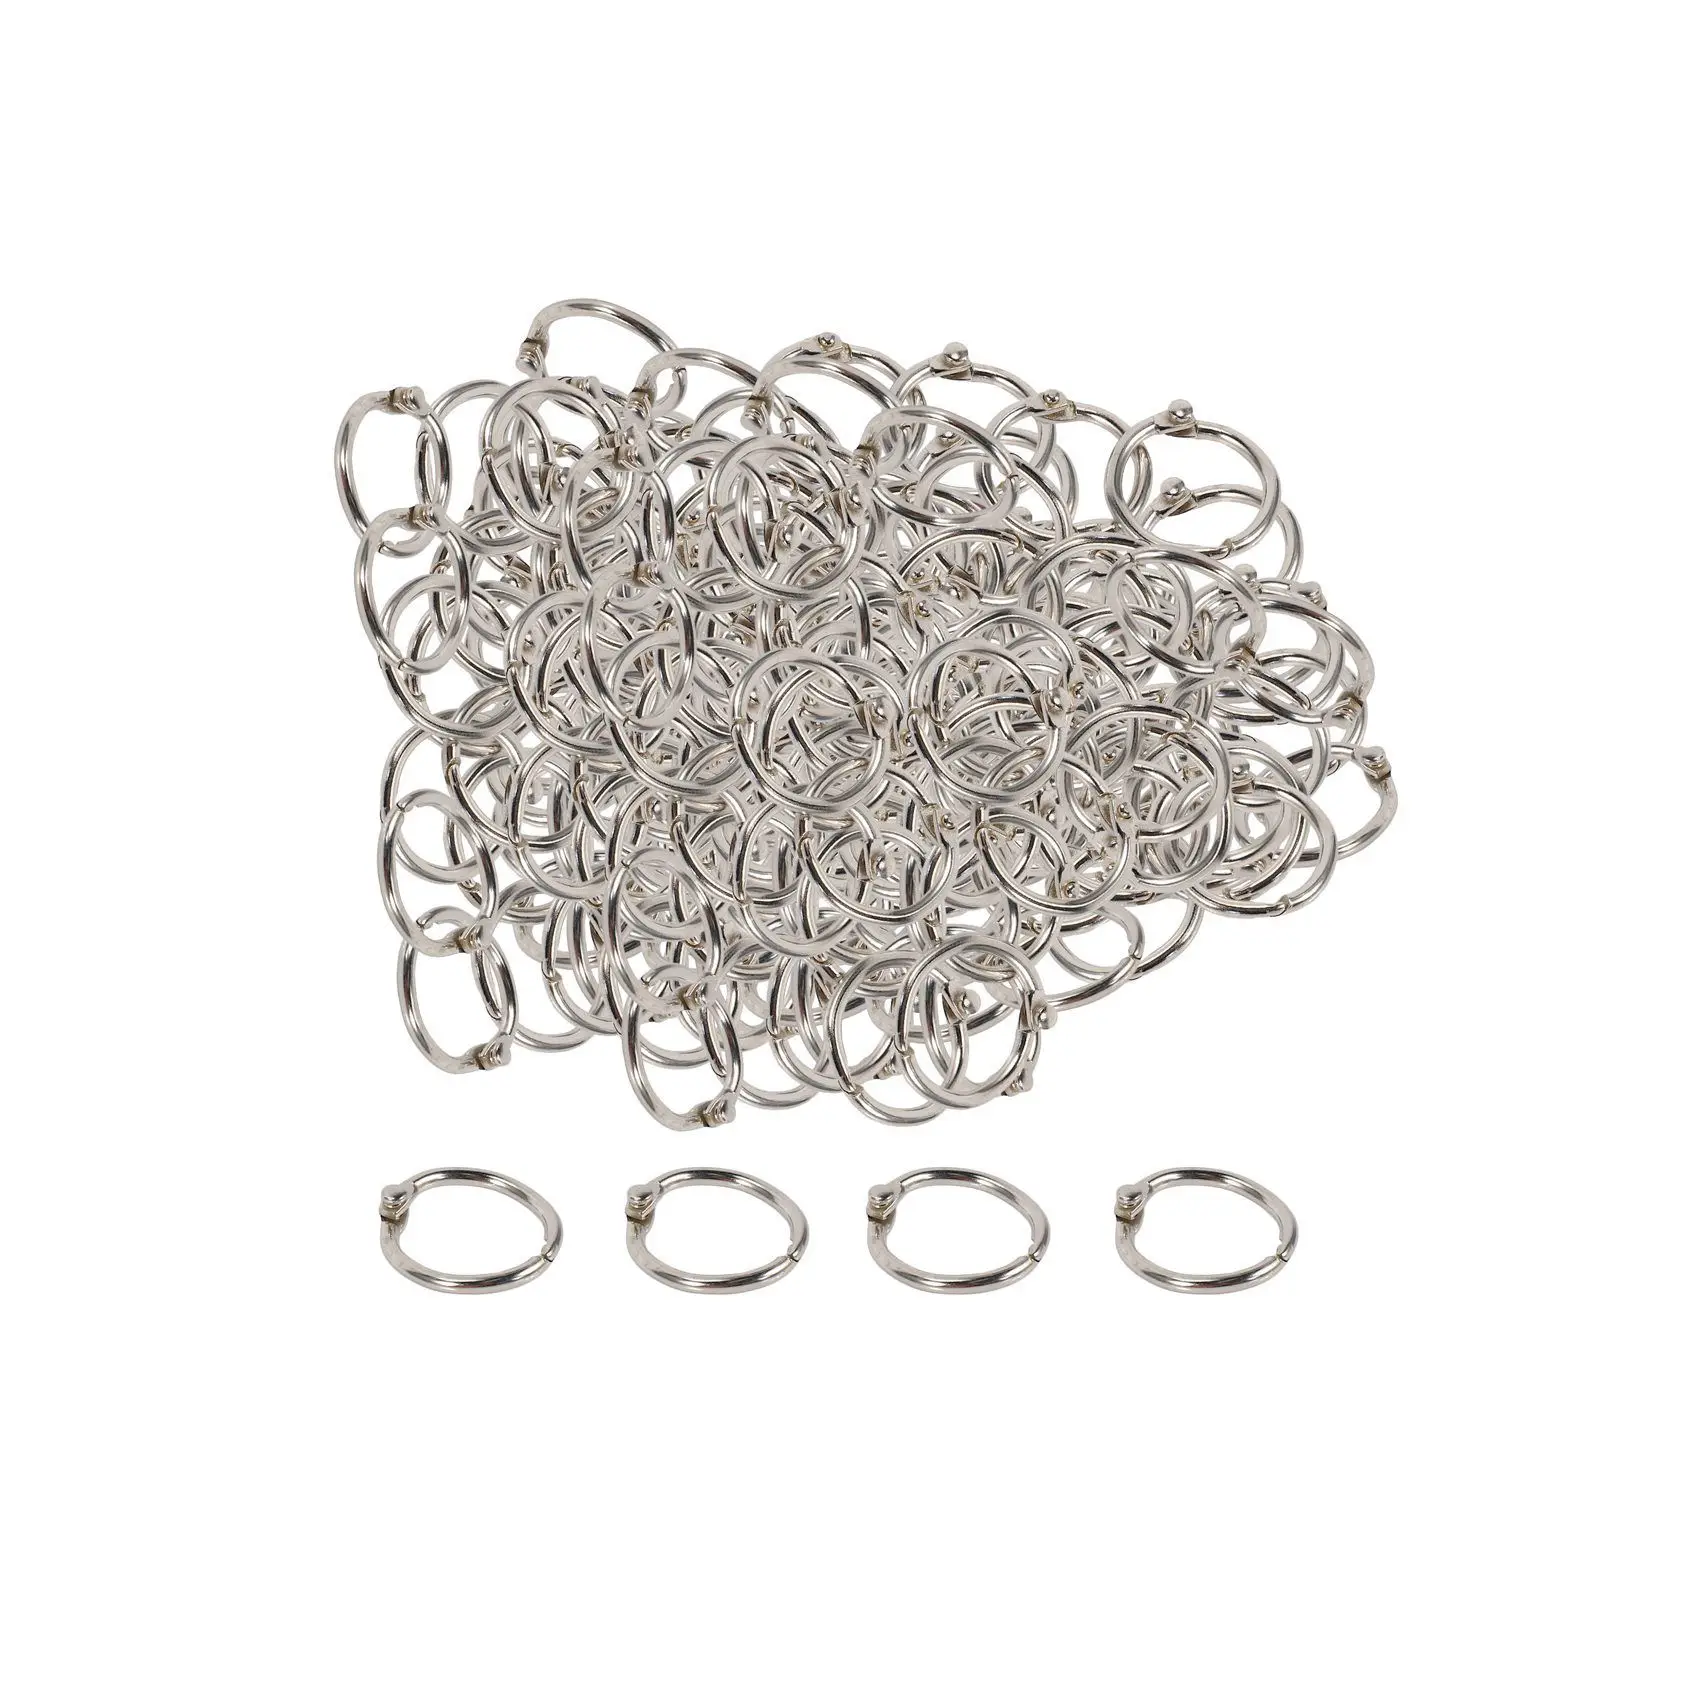 

100Pcs 19Mm Loose Leaf Binder Rings Key Rings Book Rings Binder Rings for Scrapbook/Album/Craft